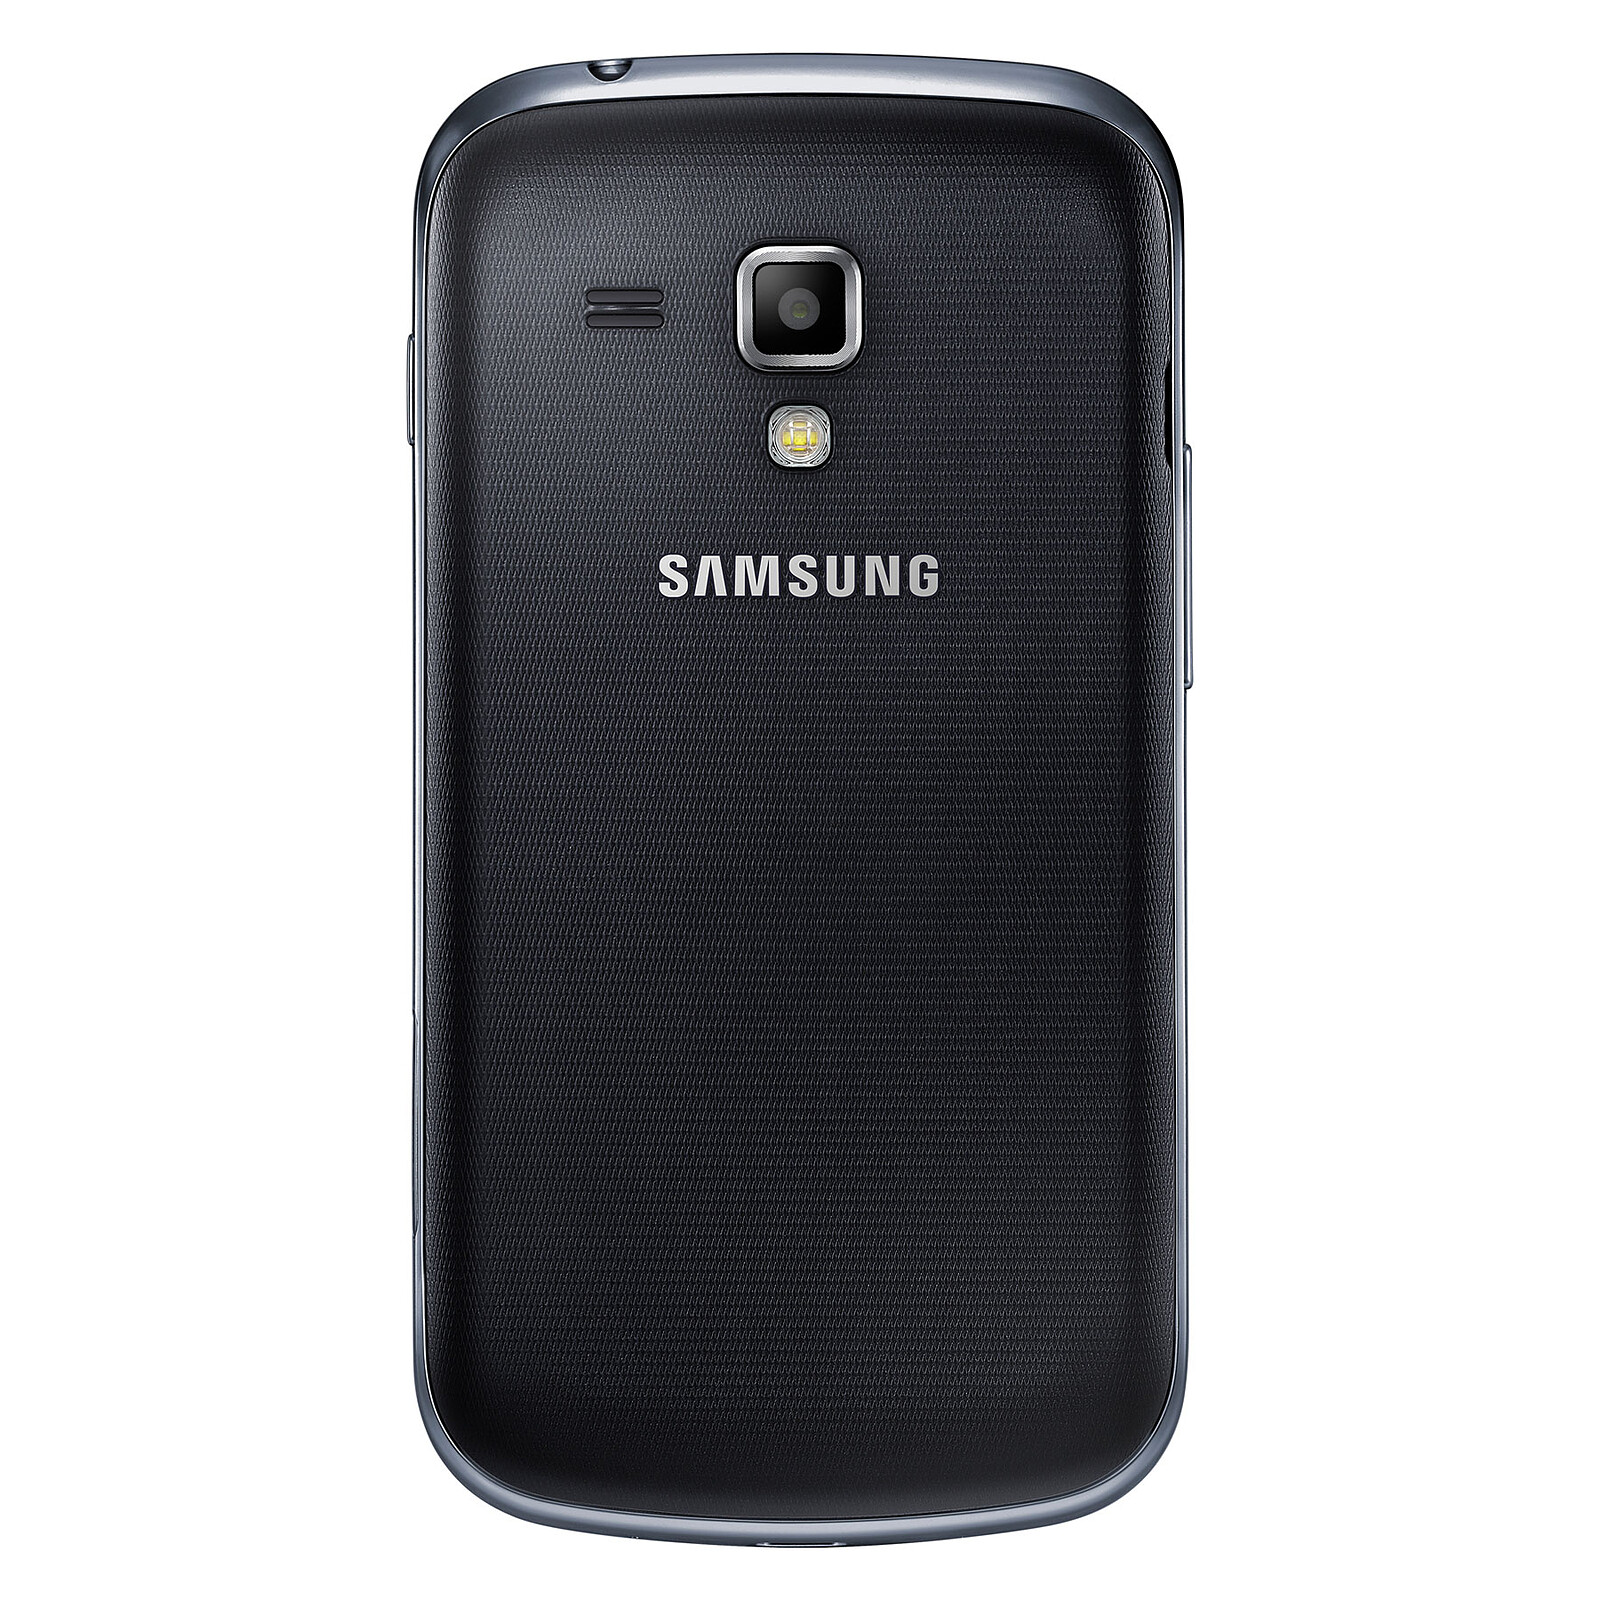 Samsung Galaxy S Duos 2 GT-S7582 Noir - Mobile & smartphone Samsung sur